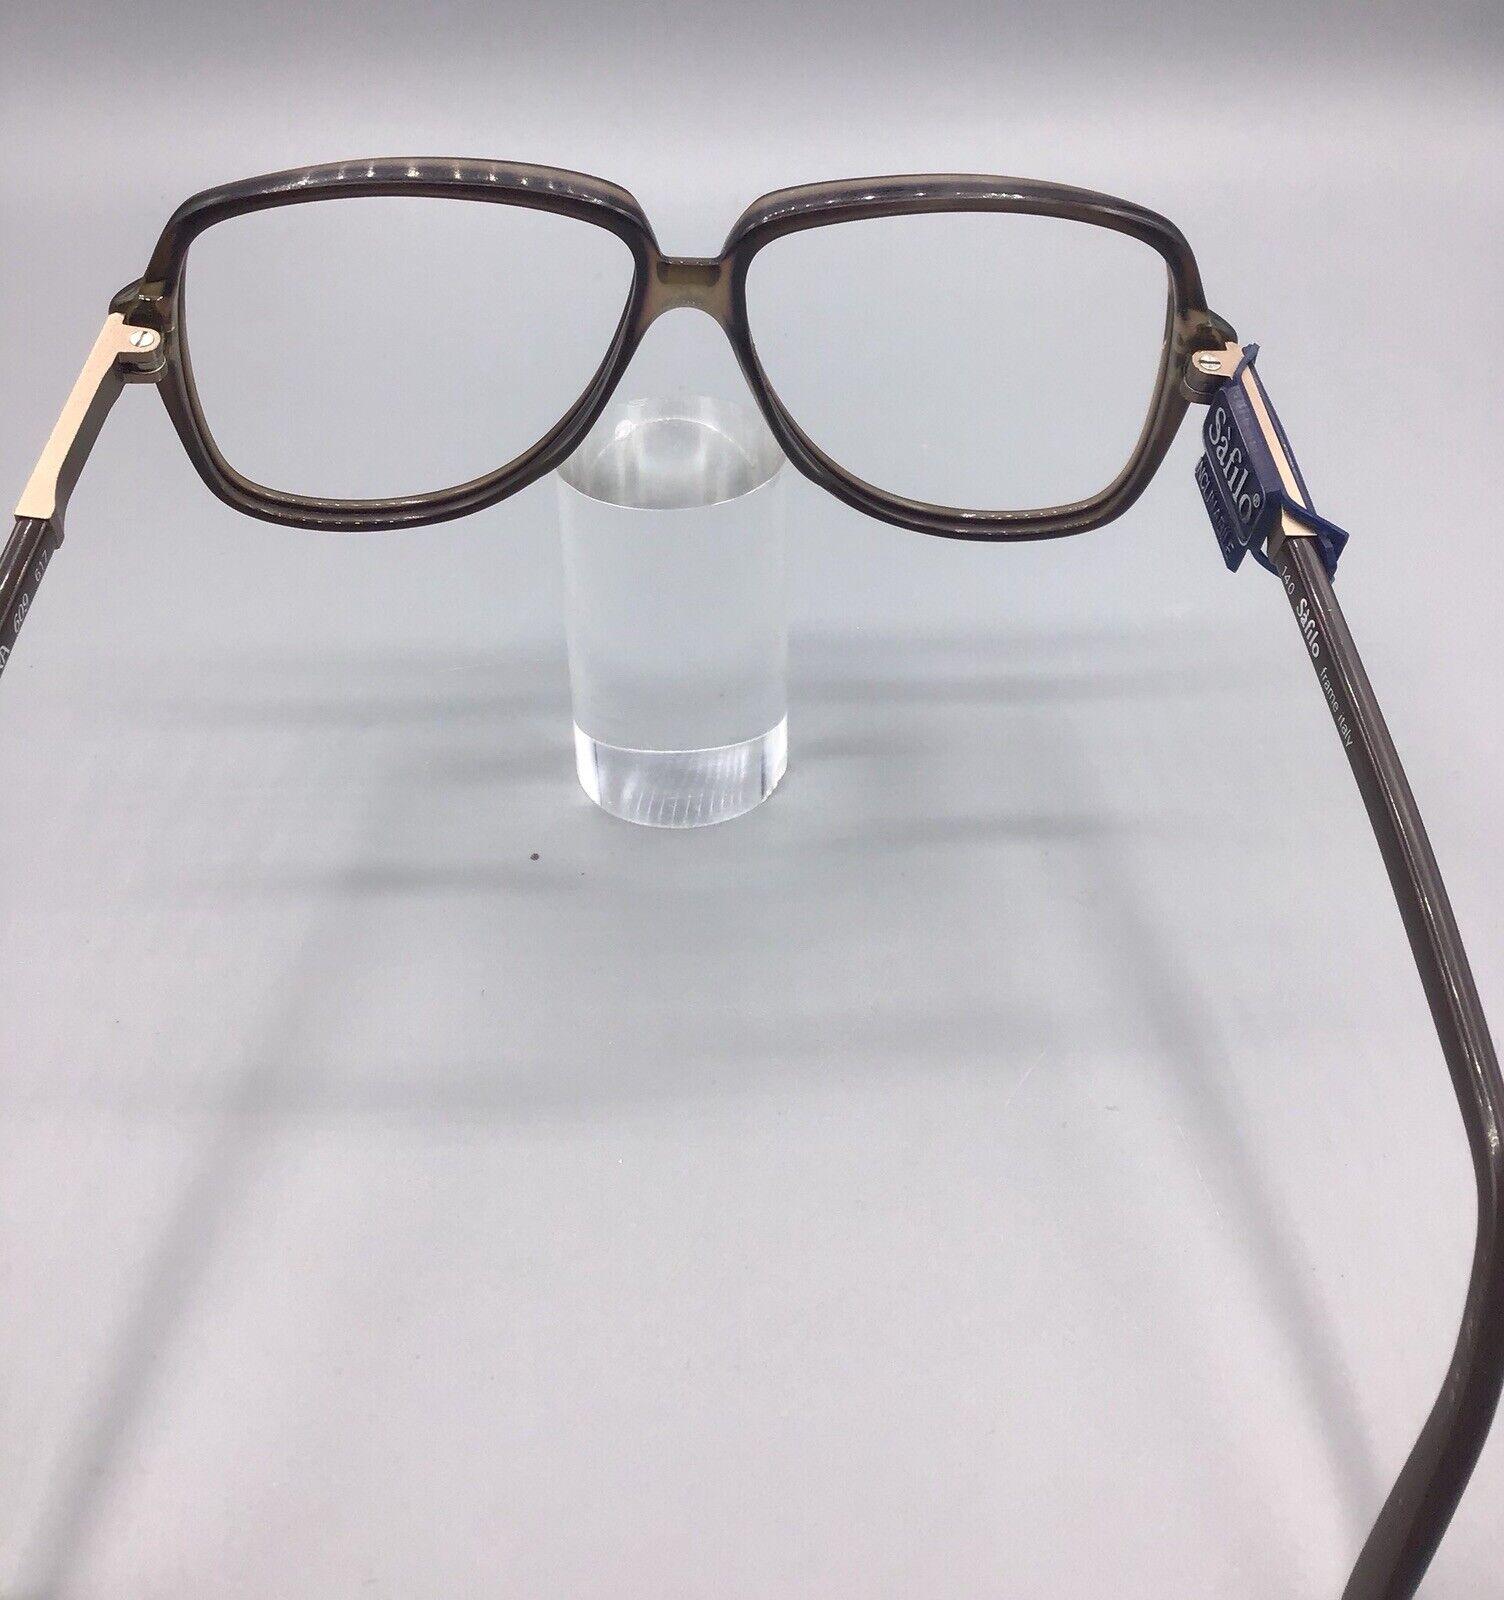 Safilo inclinabile frame italy contempora 609 617 occhiale vintage eyewear